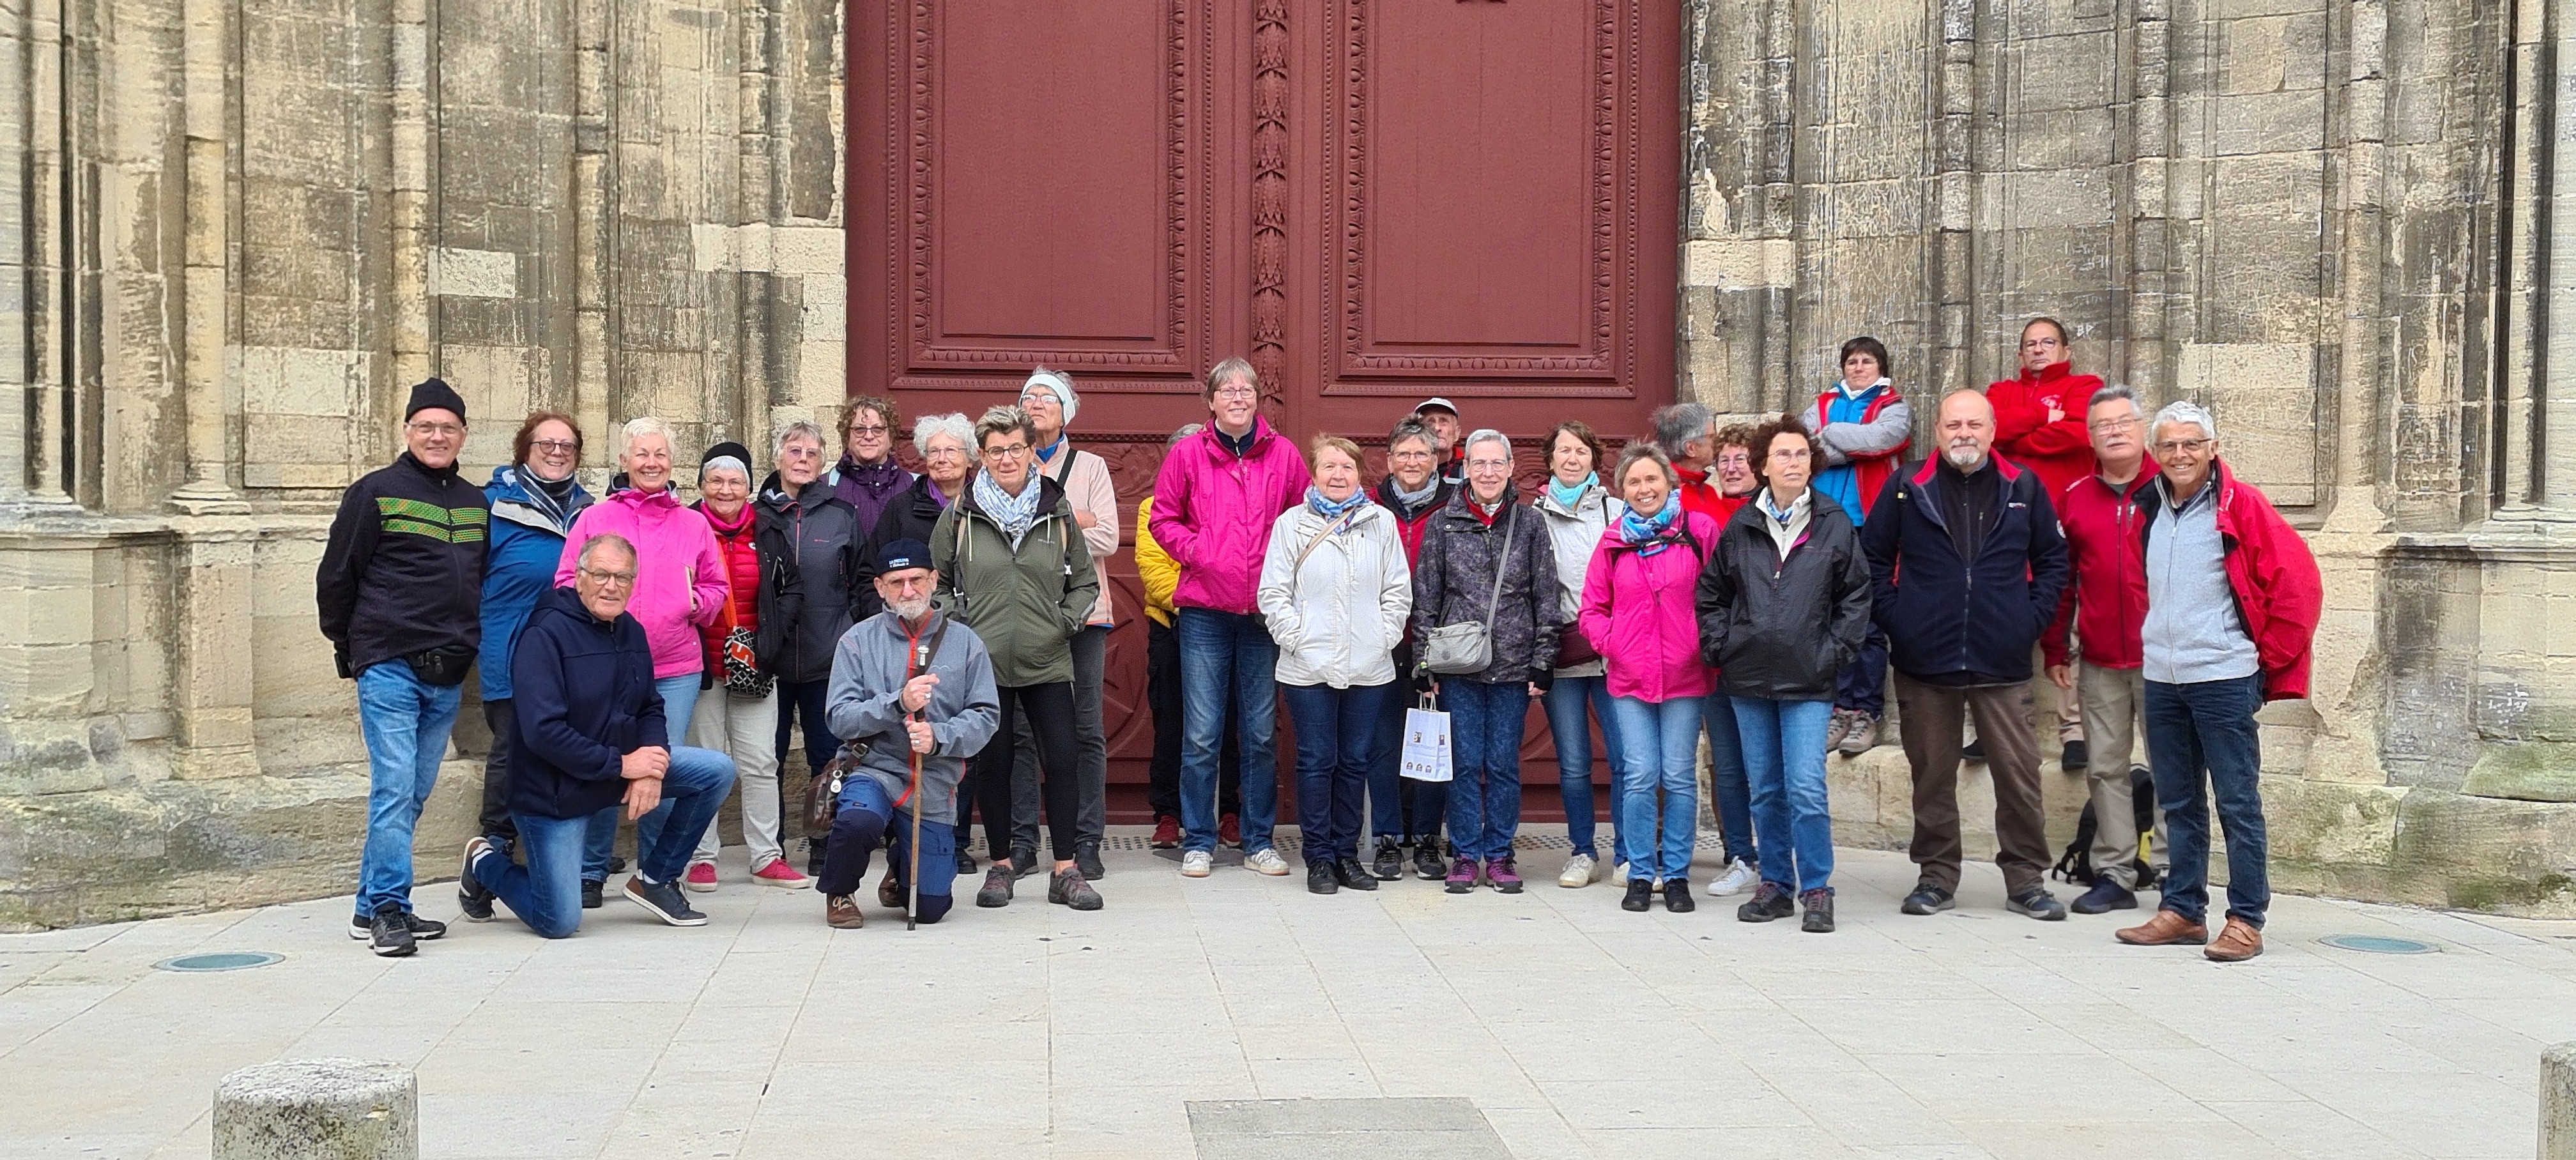 13 mai Photo de groupe devant la cathedrale